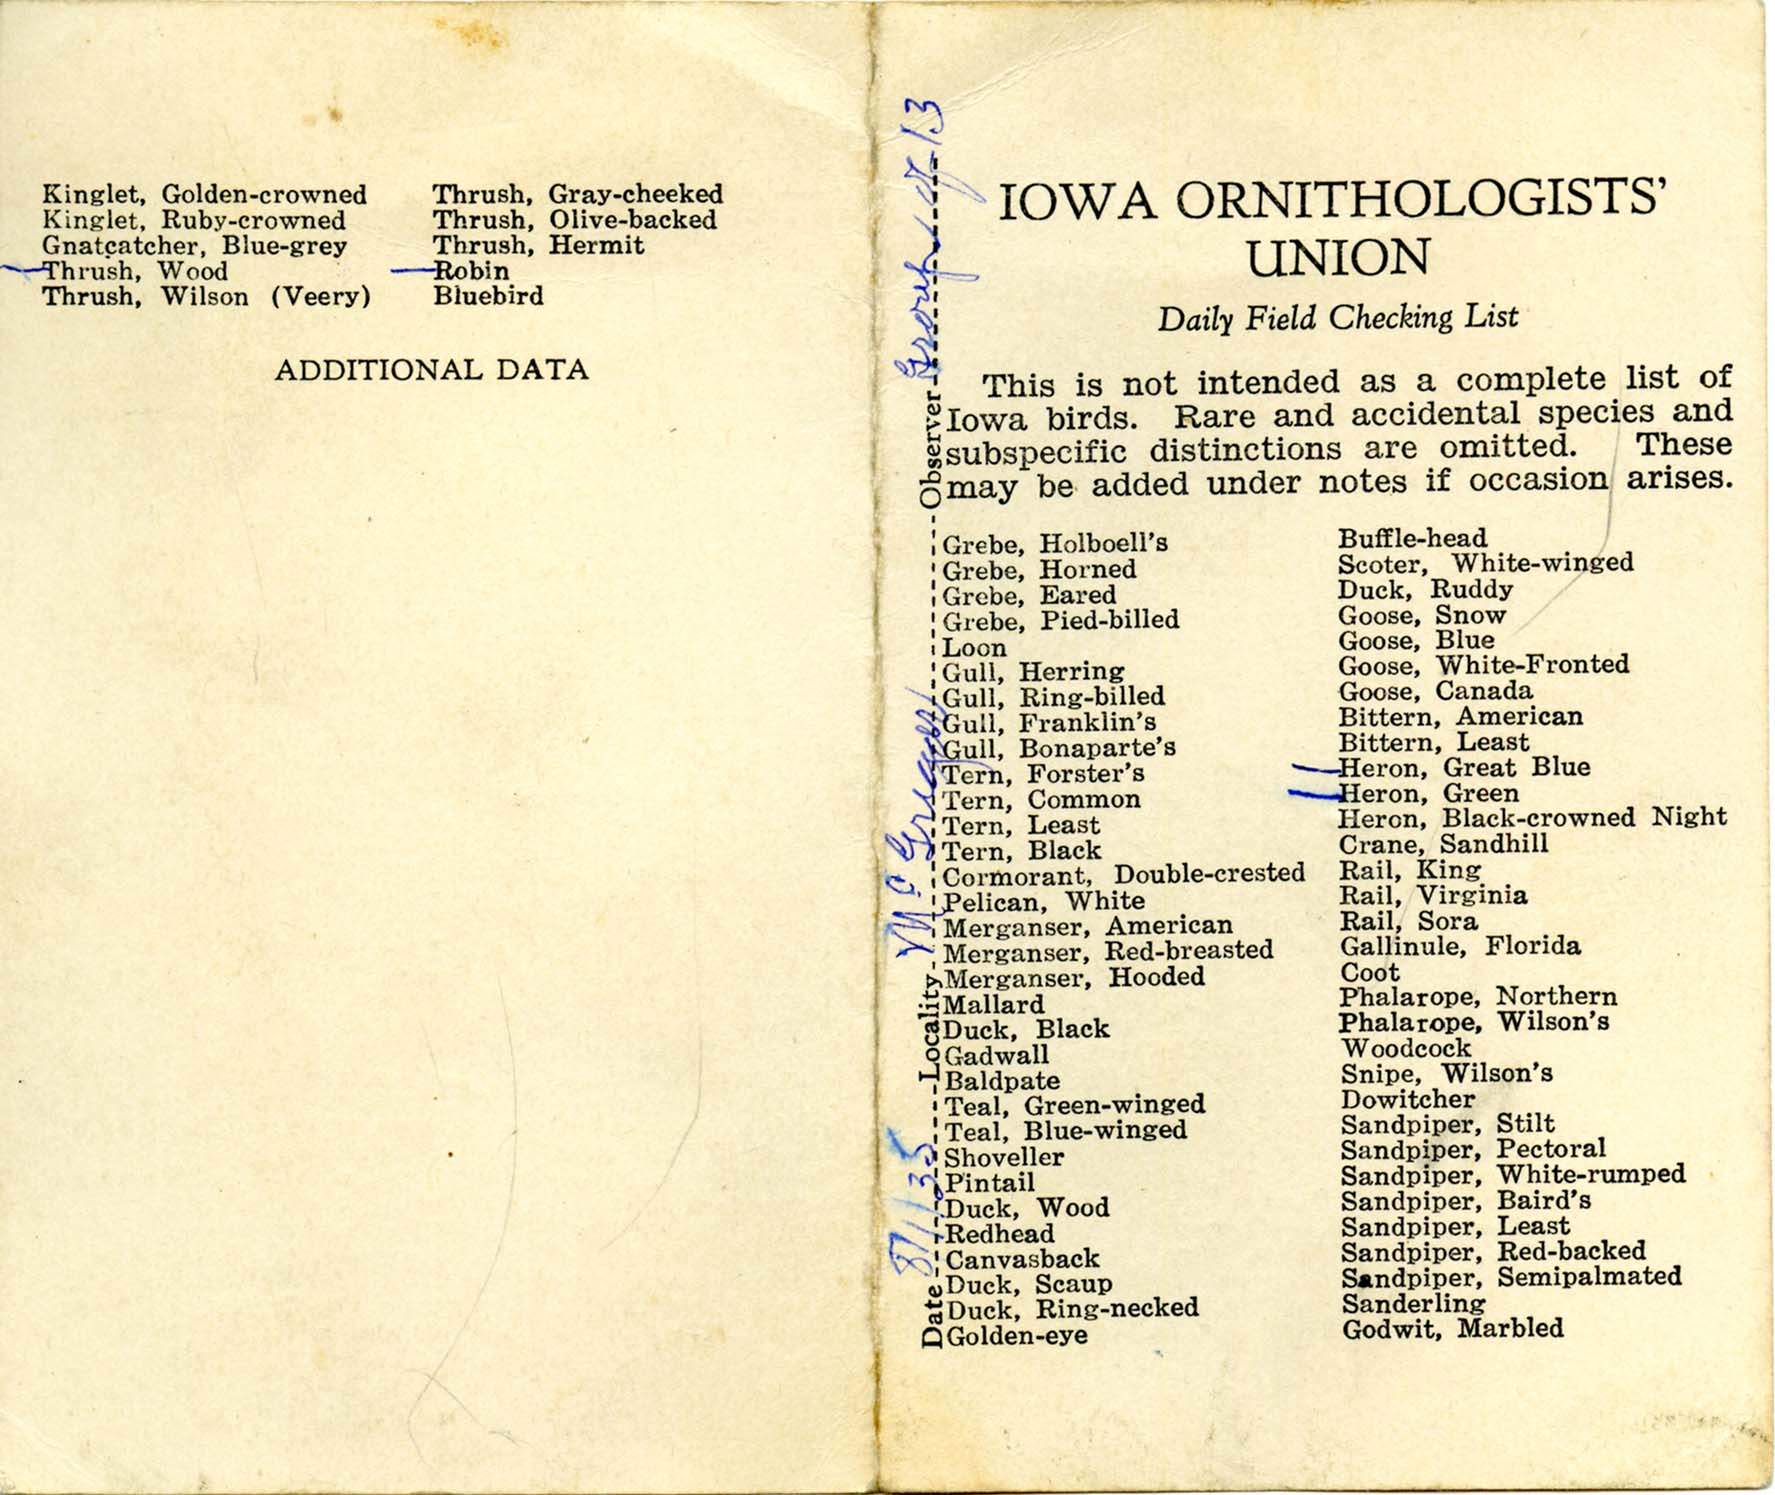 Daily field checking list, Walter Rosene, August 1, 1935